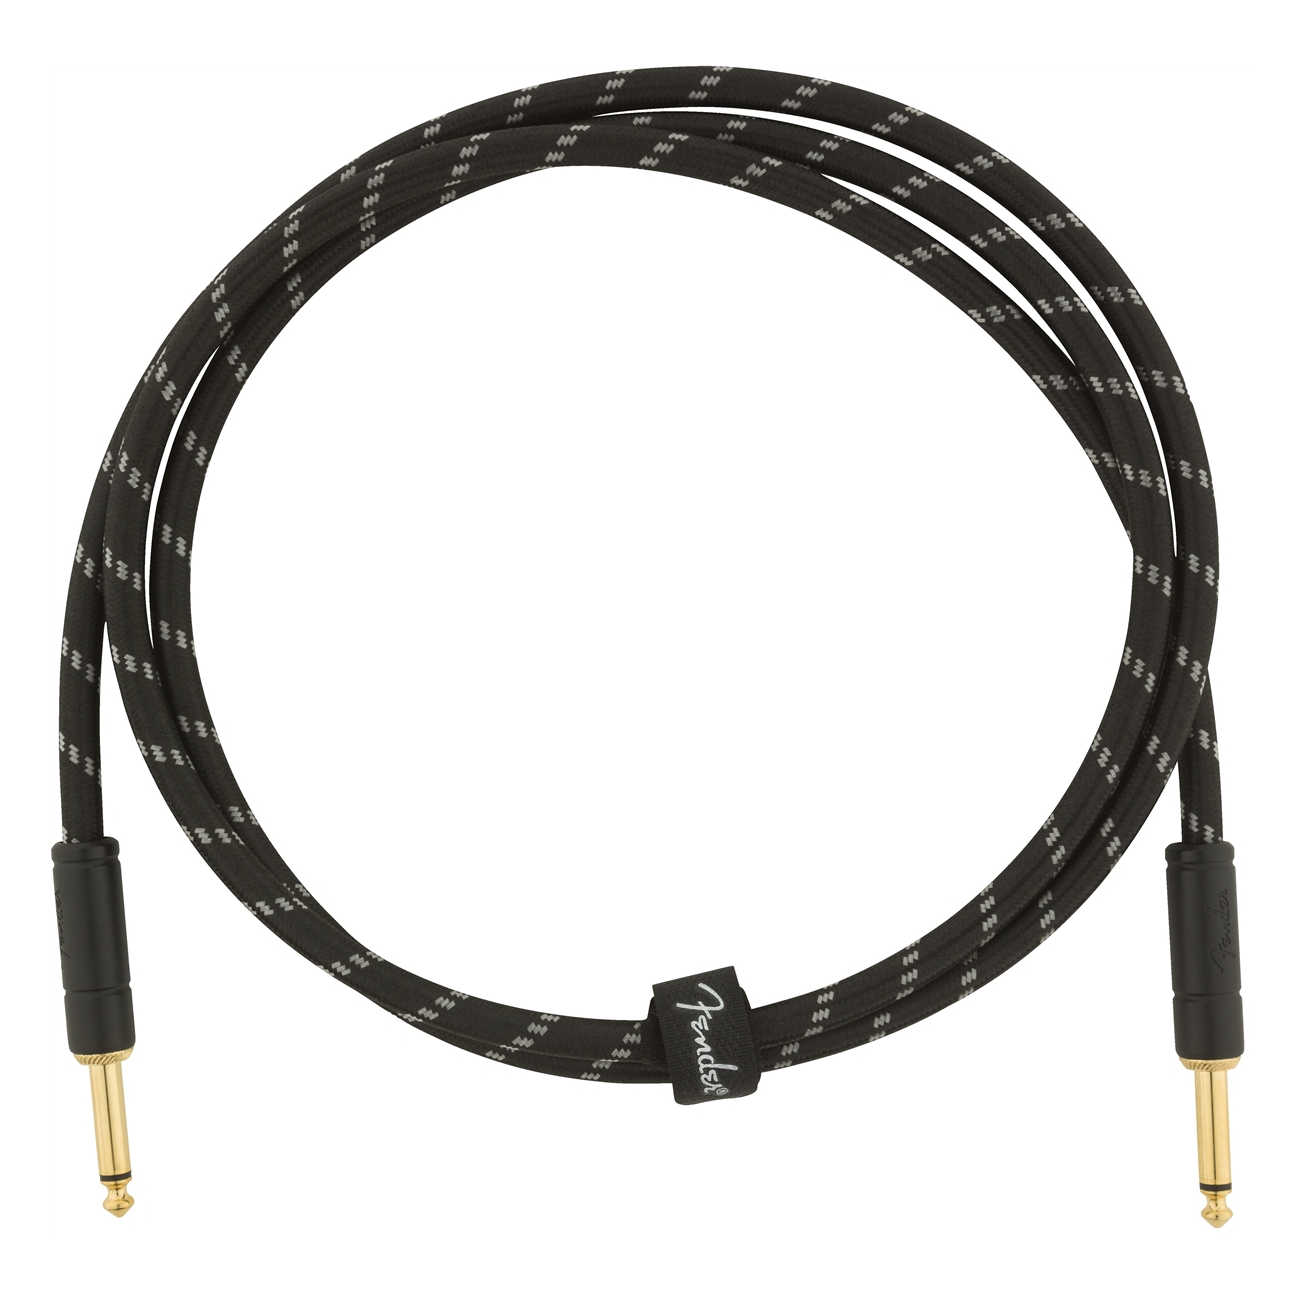 Fender Deluxe Series Instrument Cable, 5 FT, Black Tweed